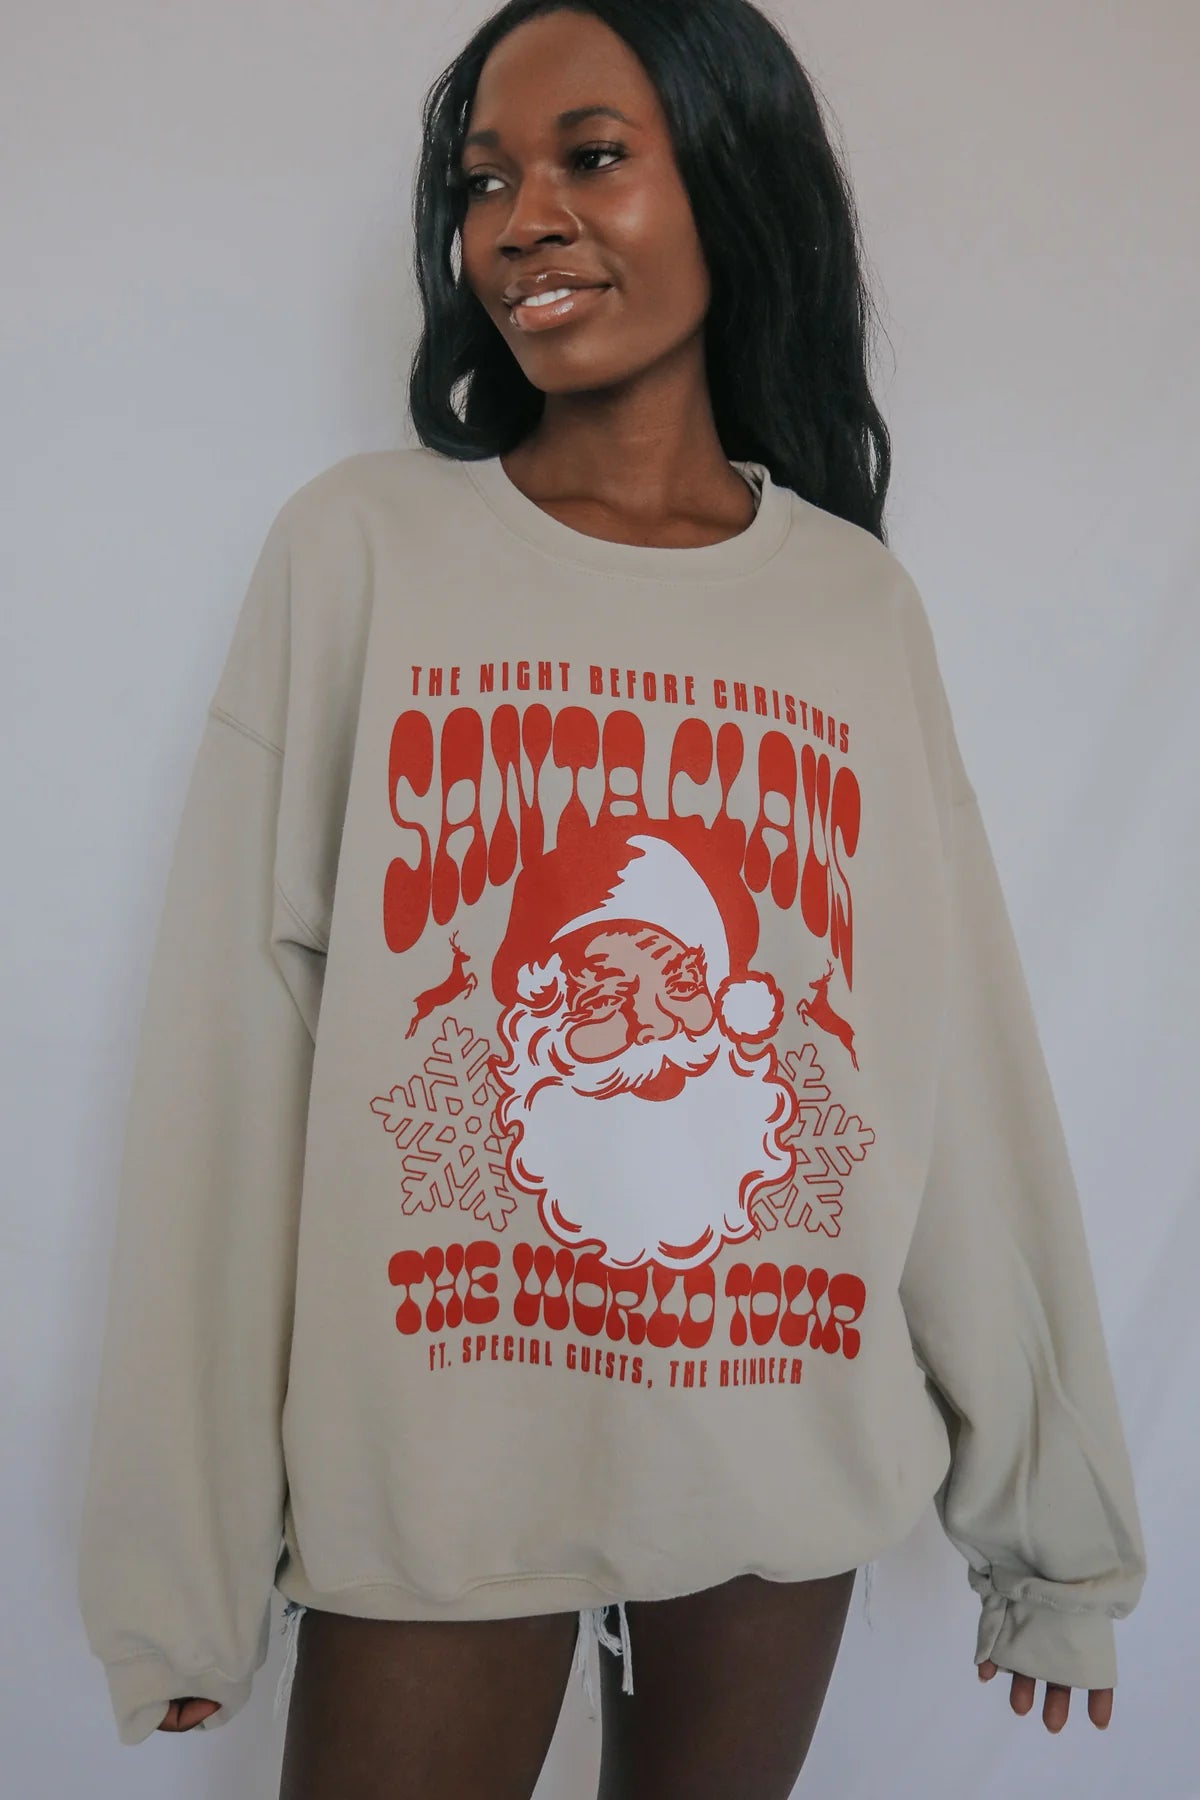 Santa Claus World Tour Sweatshirt